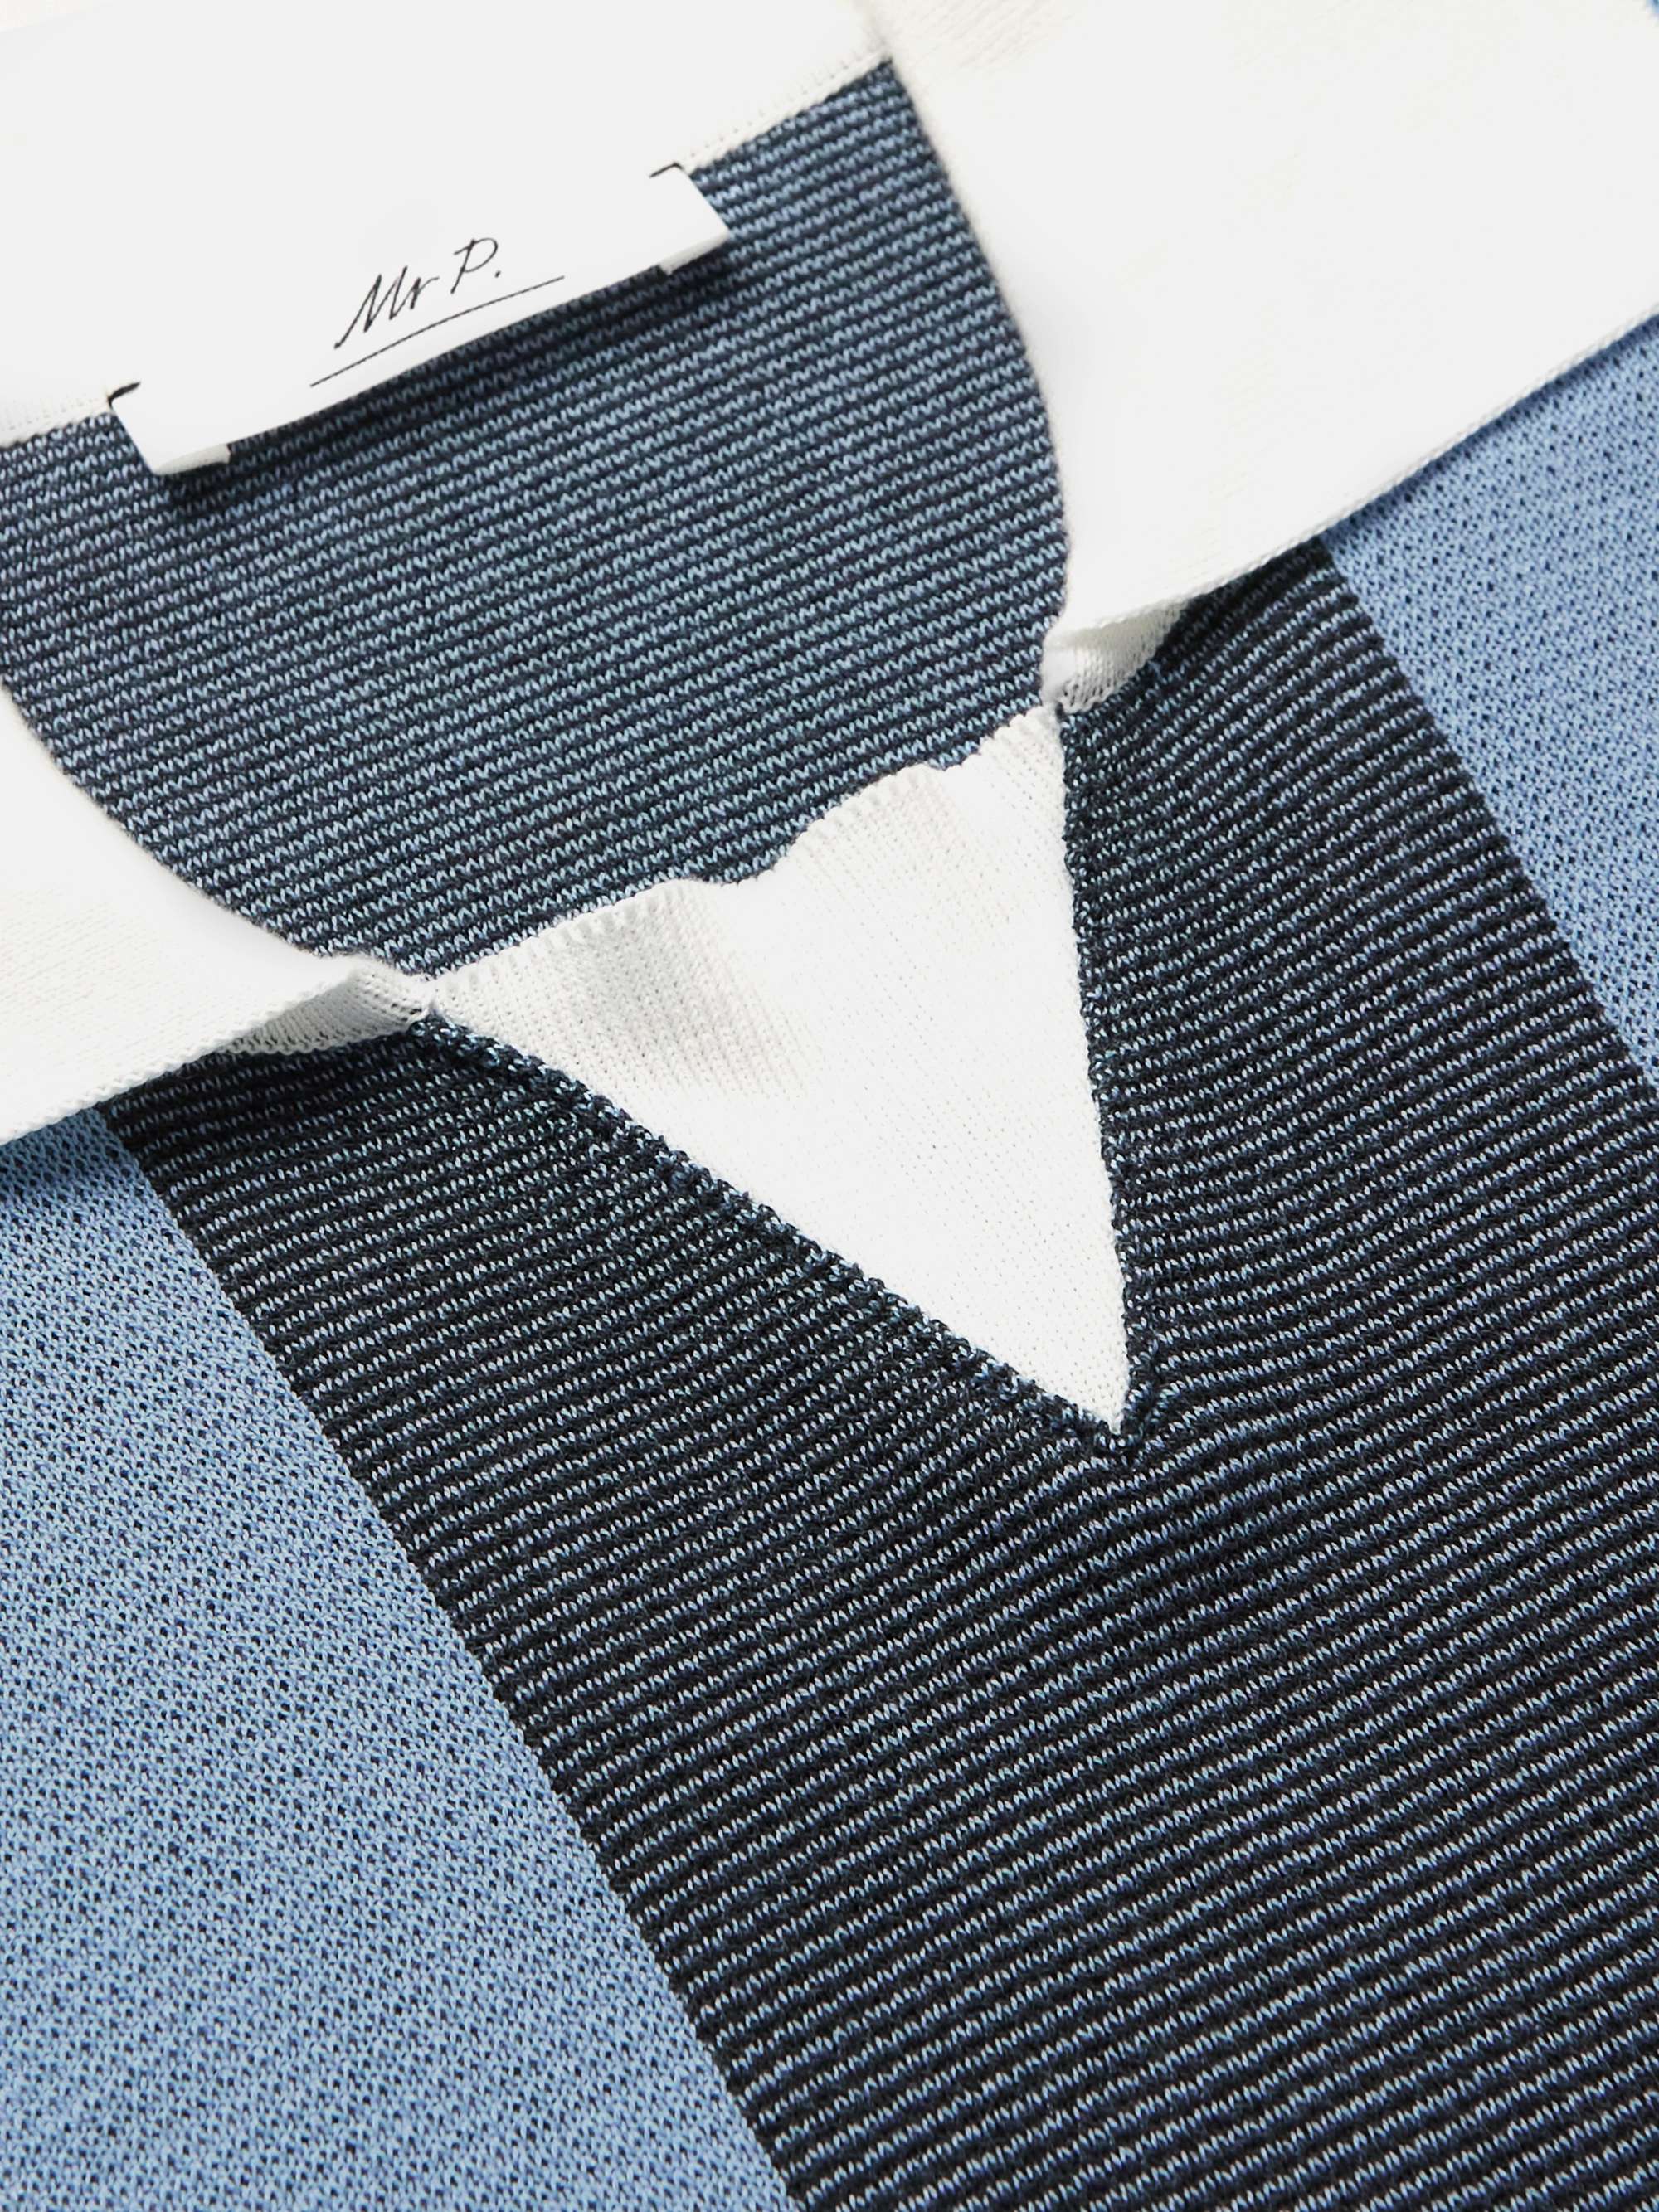 Blue Striped Two-Tone Honeycomb-Knit Cotton-Blend Polo Shirt | MR P ...